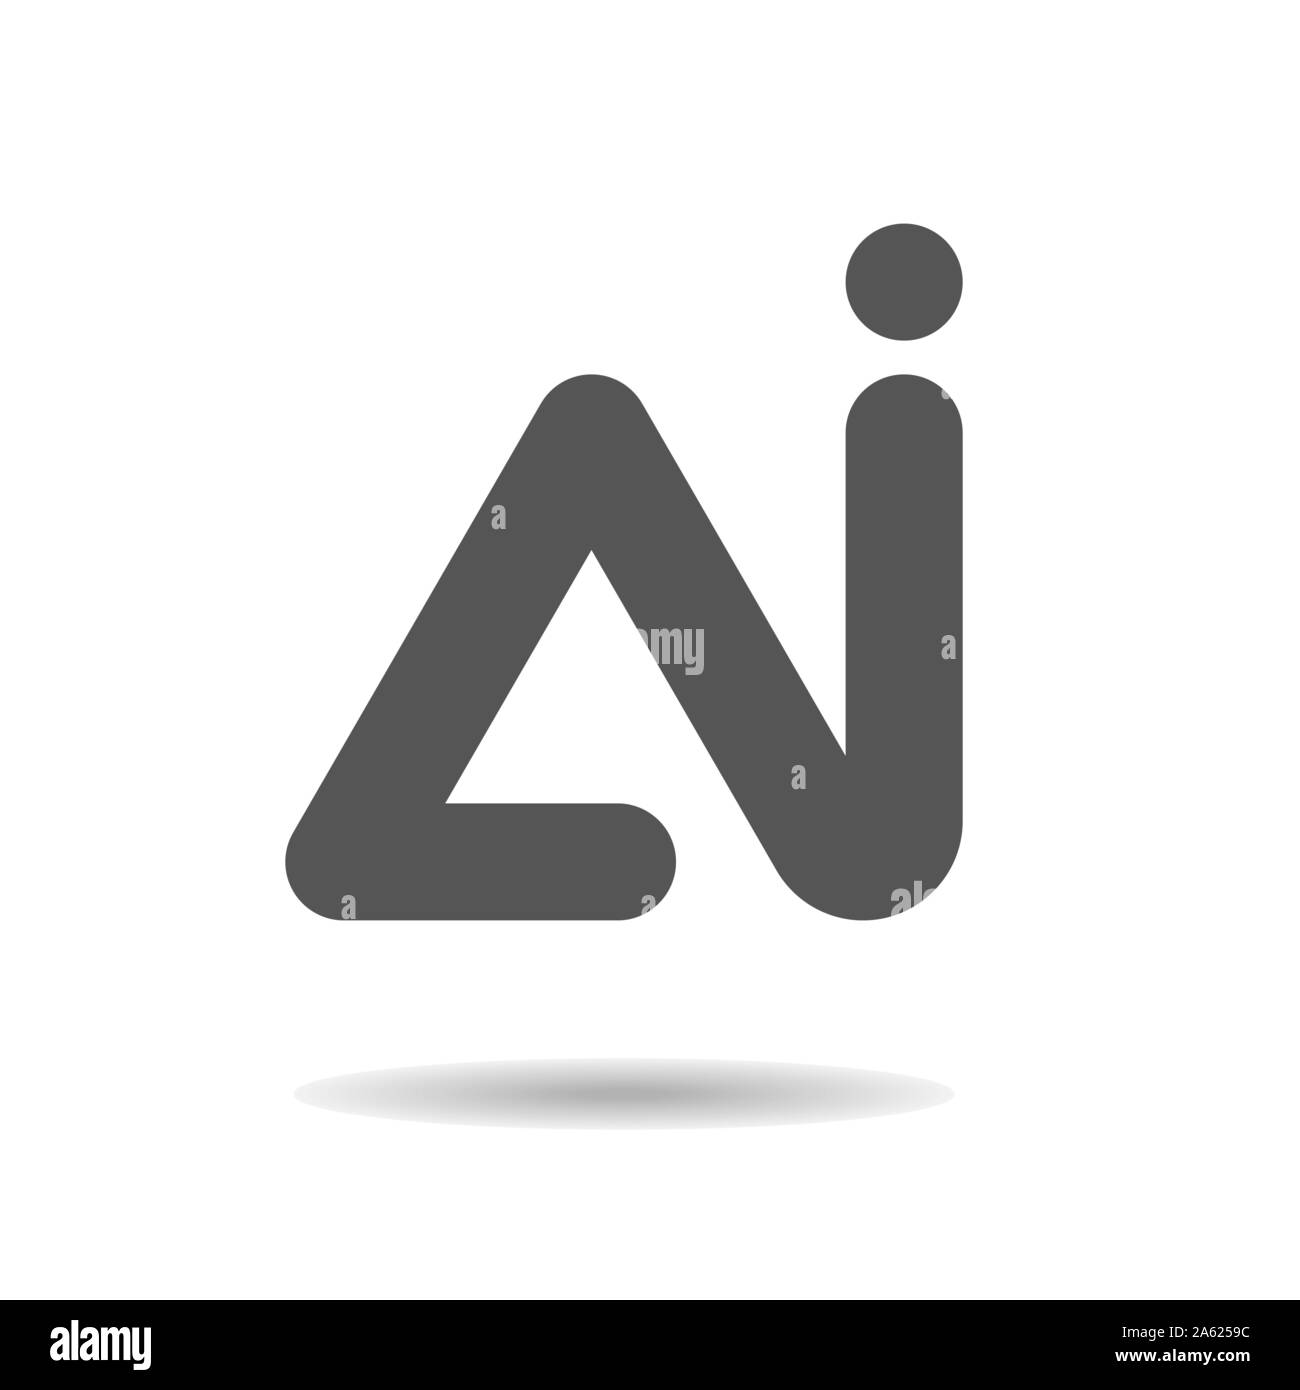 AI Logo Letter Vector Template Design Illustration. Ai, logo, letter, vector, concept, design, modern, icon, background, abstract, web, logotype Stock Vector